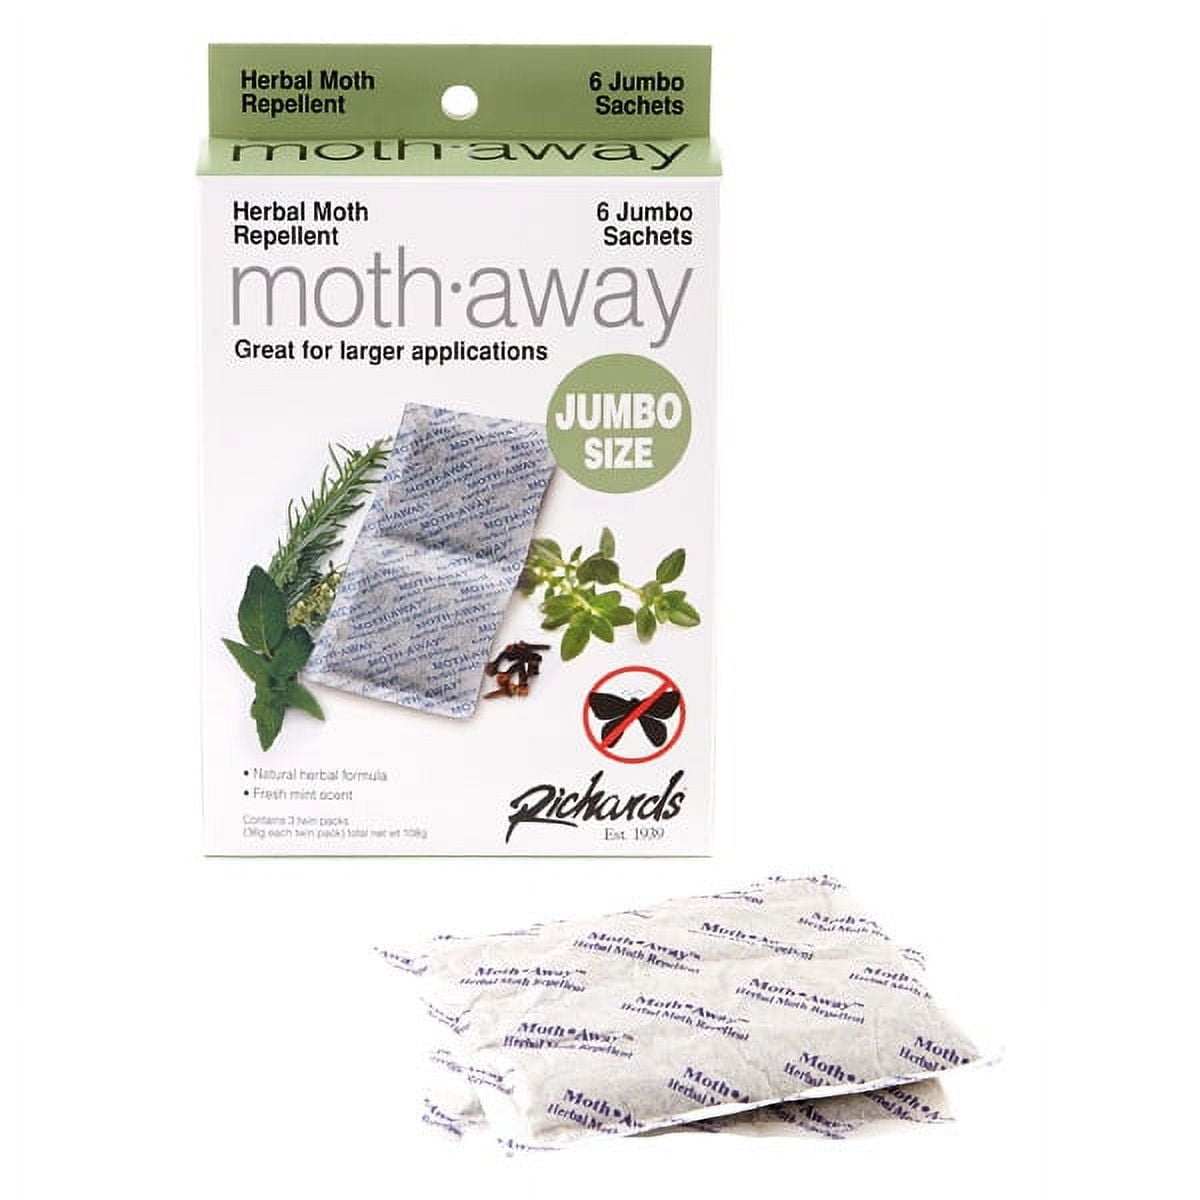 Richards Homewares Moth Away Value Pack 1 ct